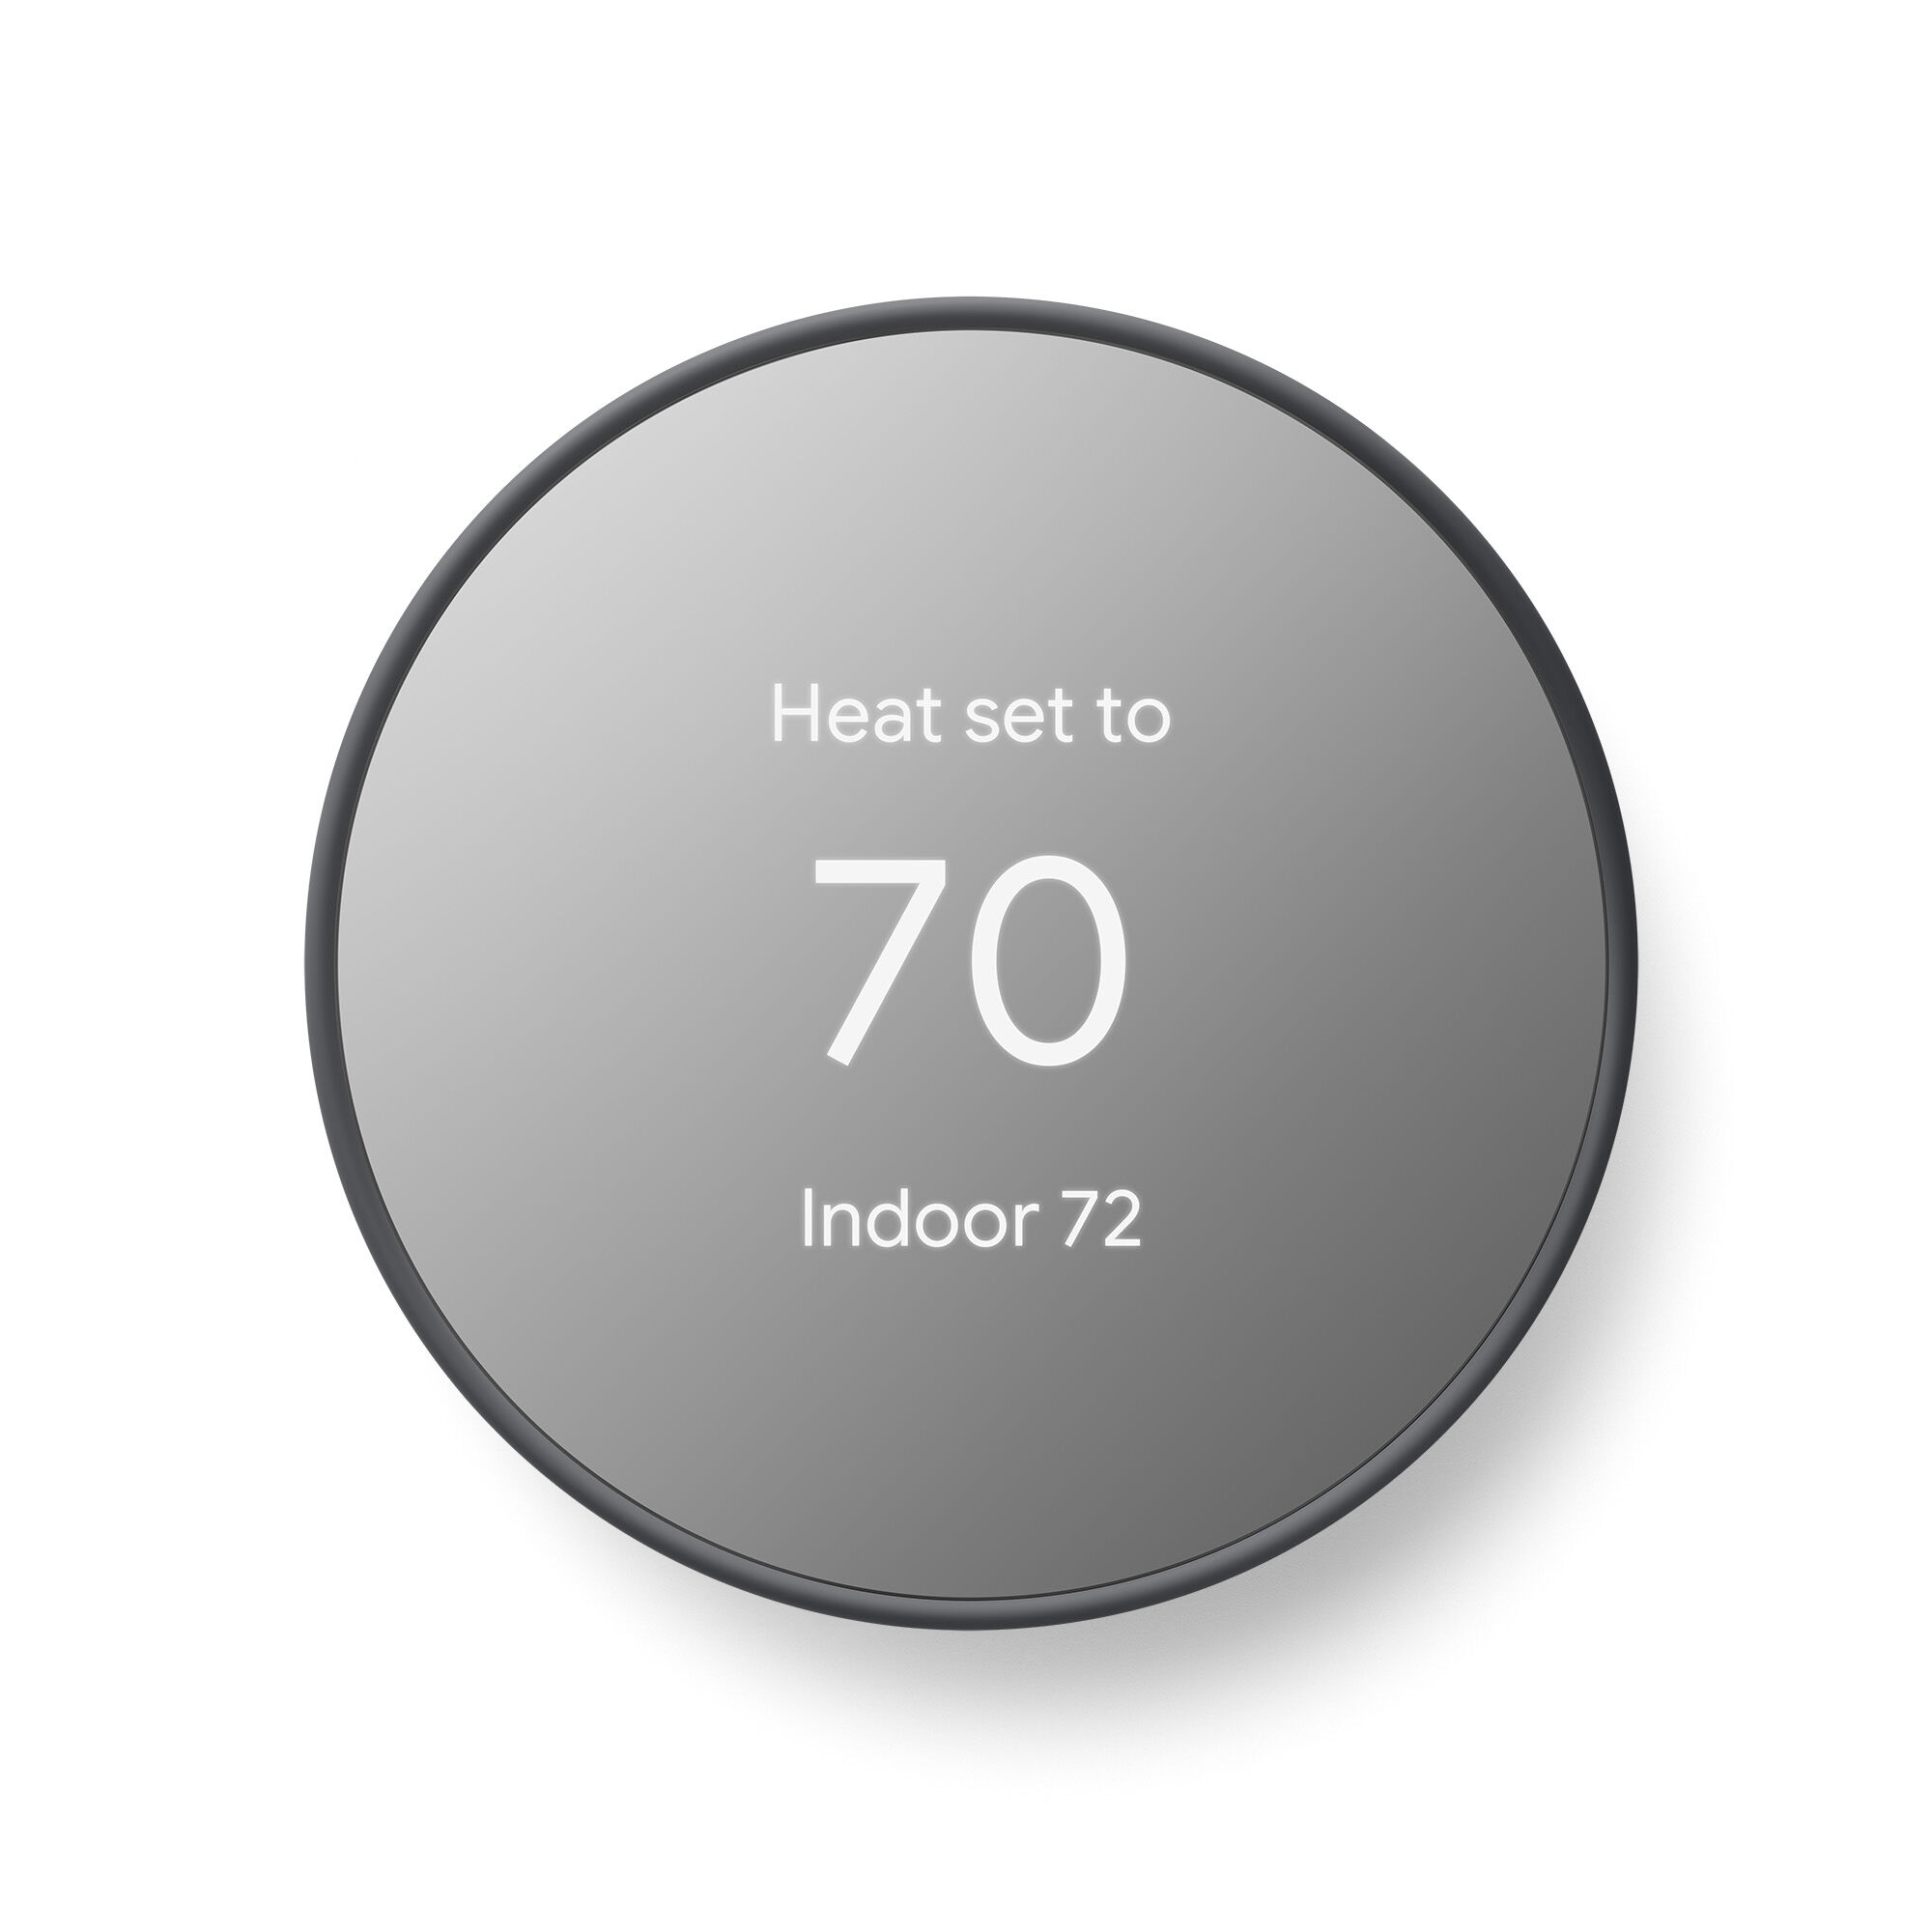 Google Nest Thermostat Charcoal